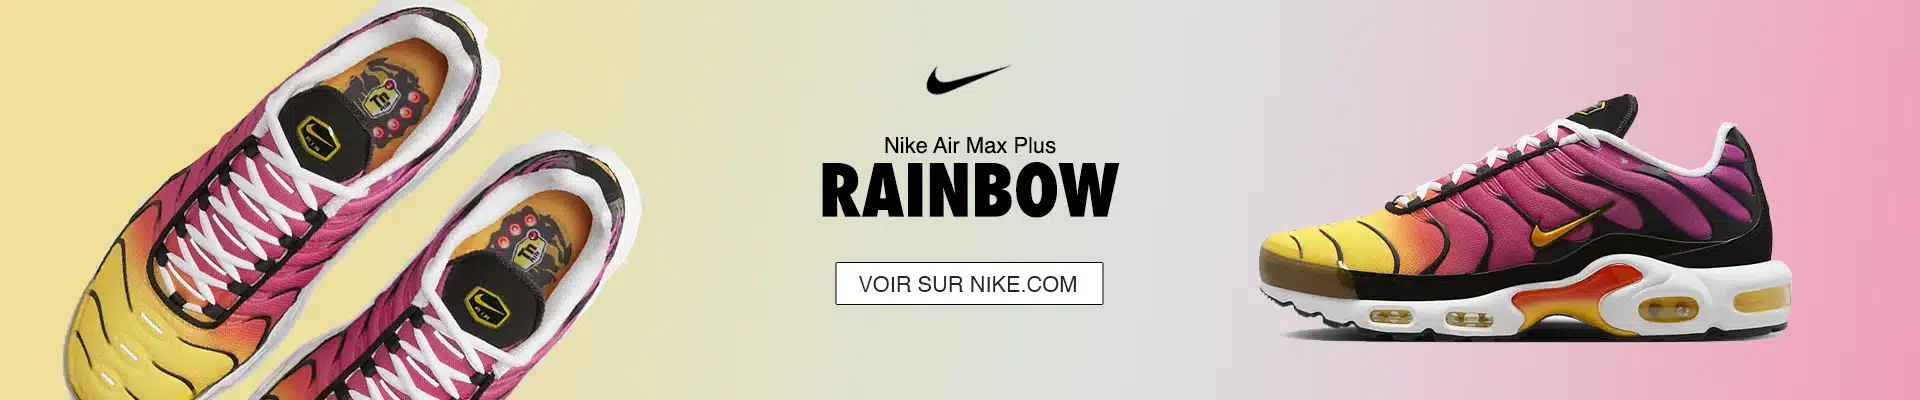 Nike Air Max Plus Rainbow